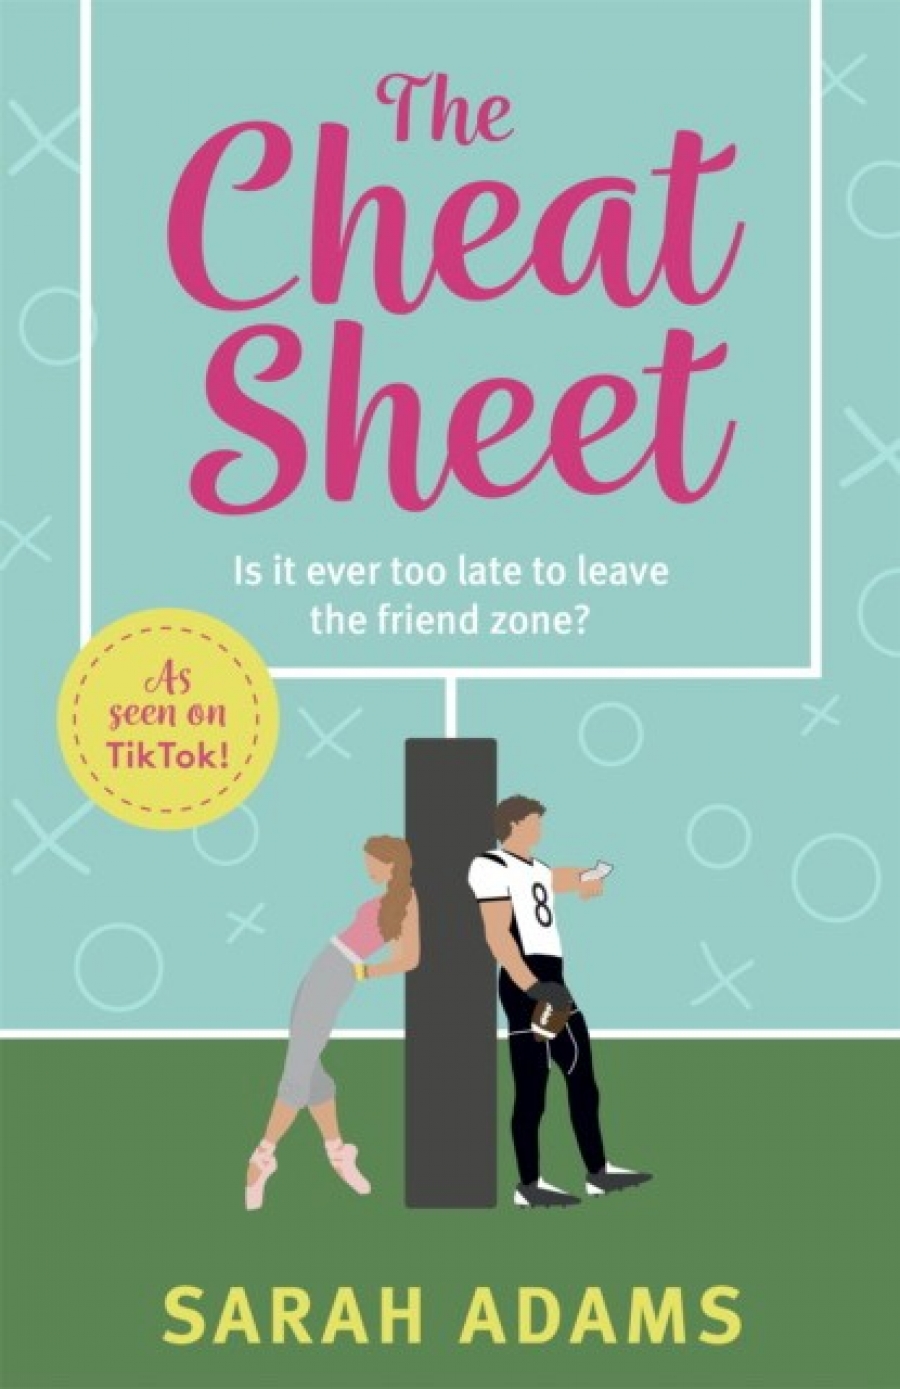 Sarah, Adams Cheat sheet 